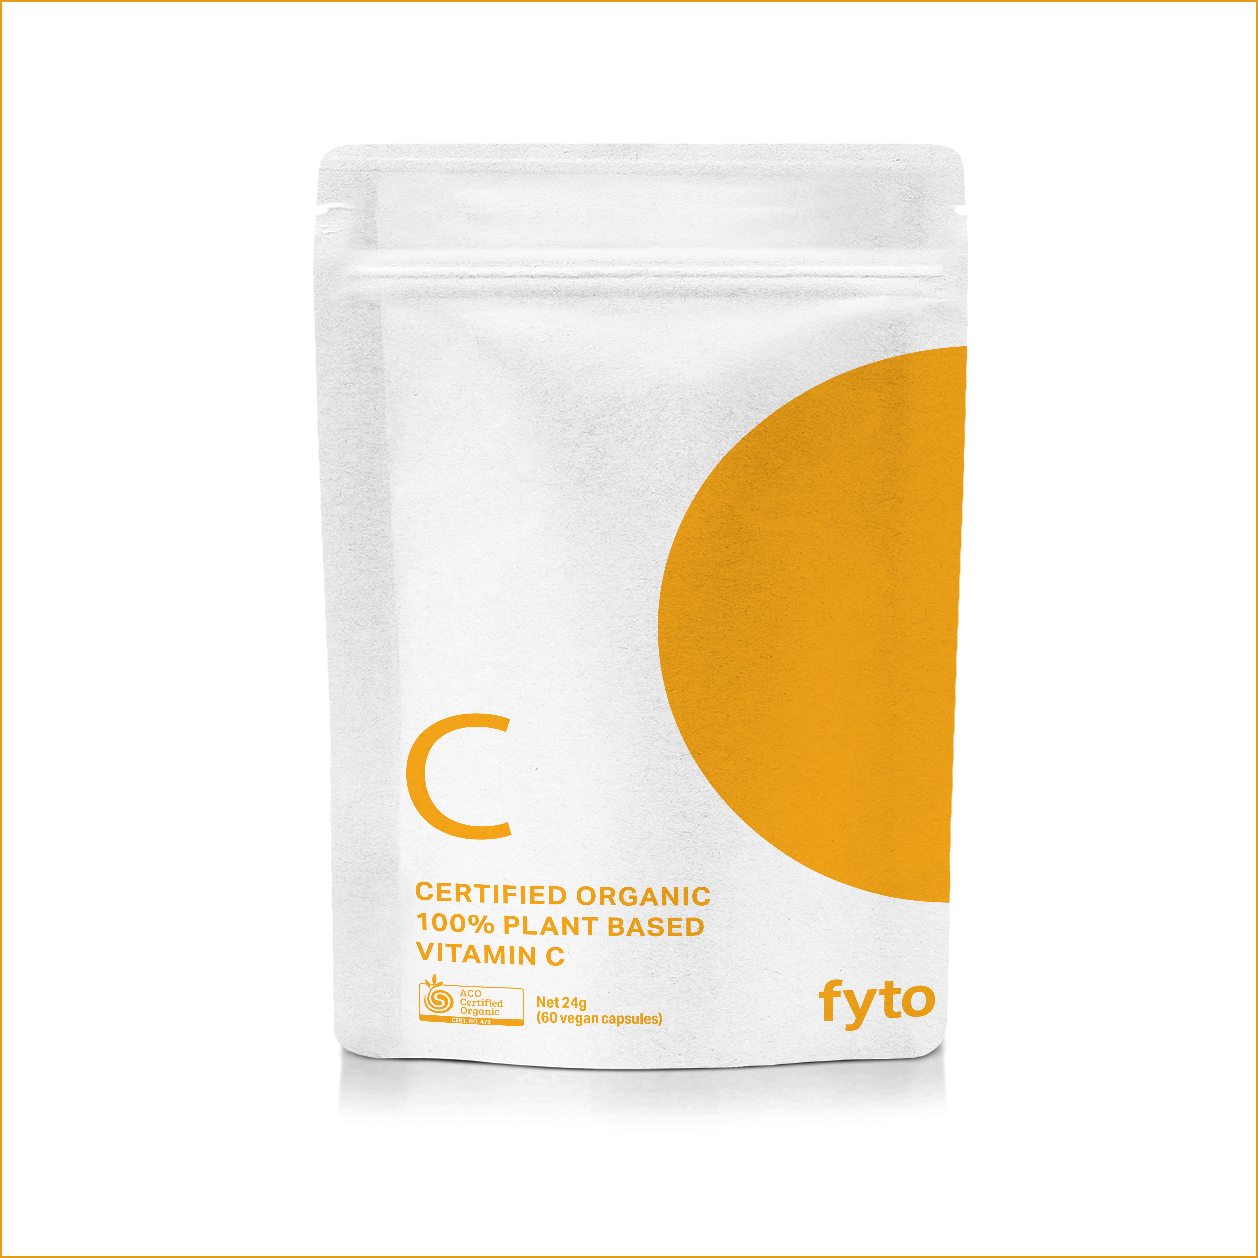 Fyto Vitamin C Certified Organic 100% Plant based 60 capsules